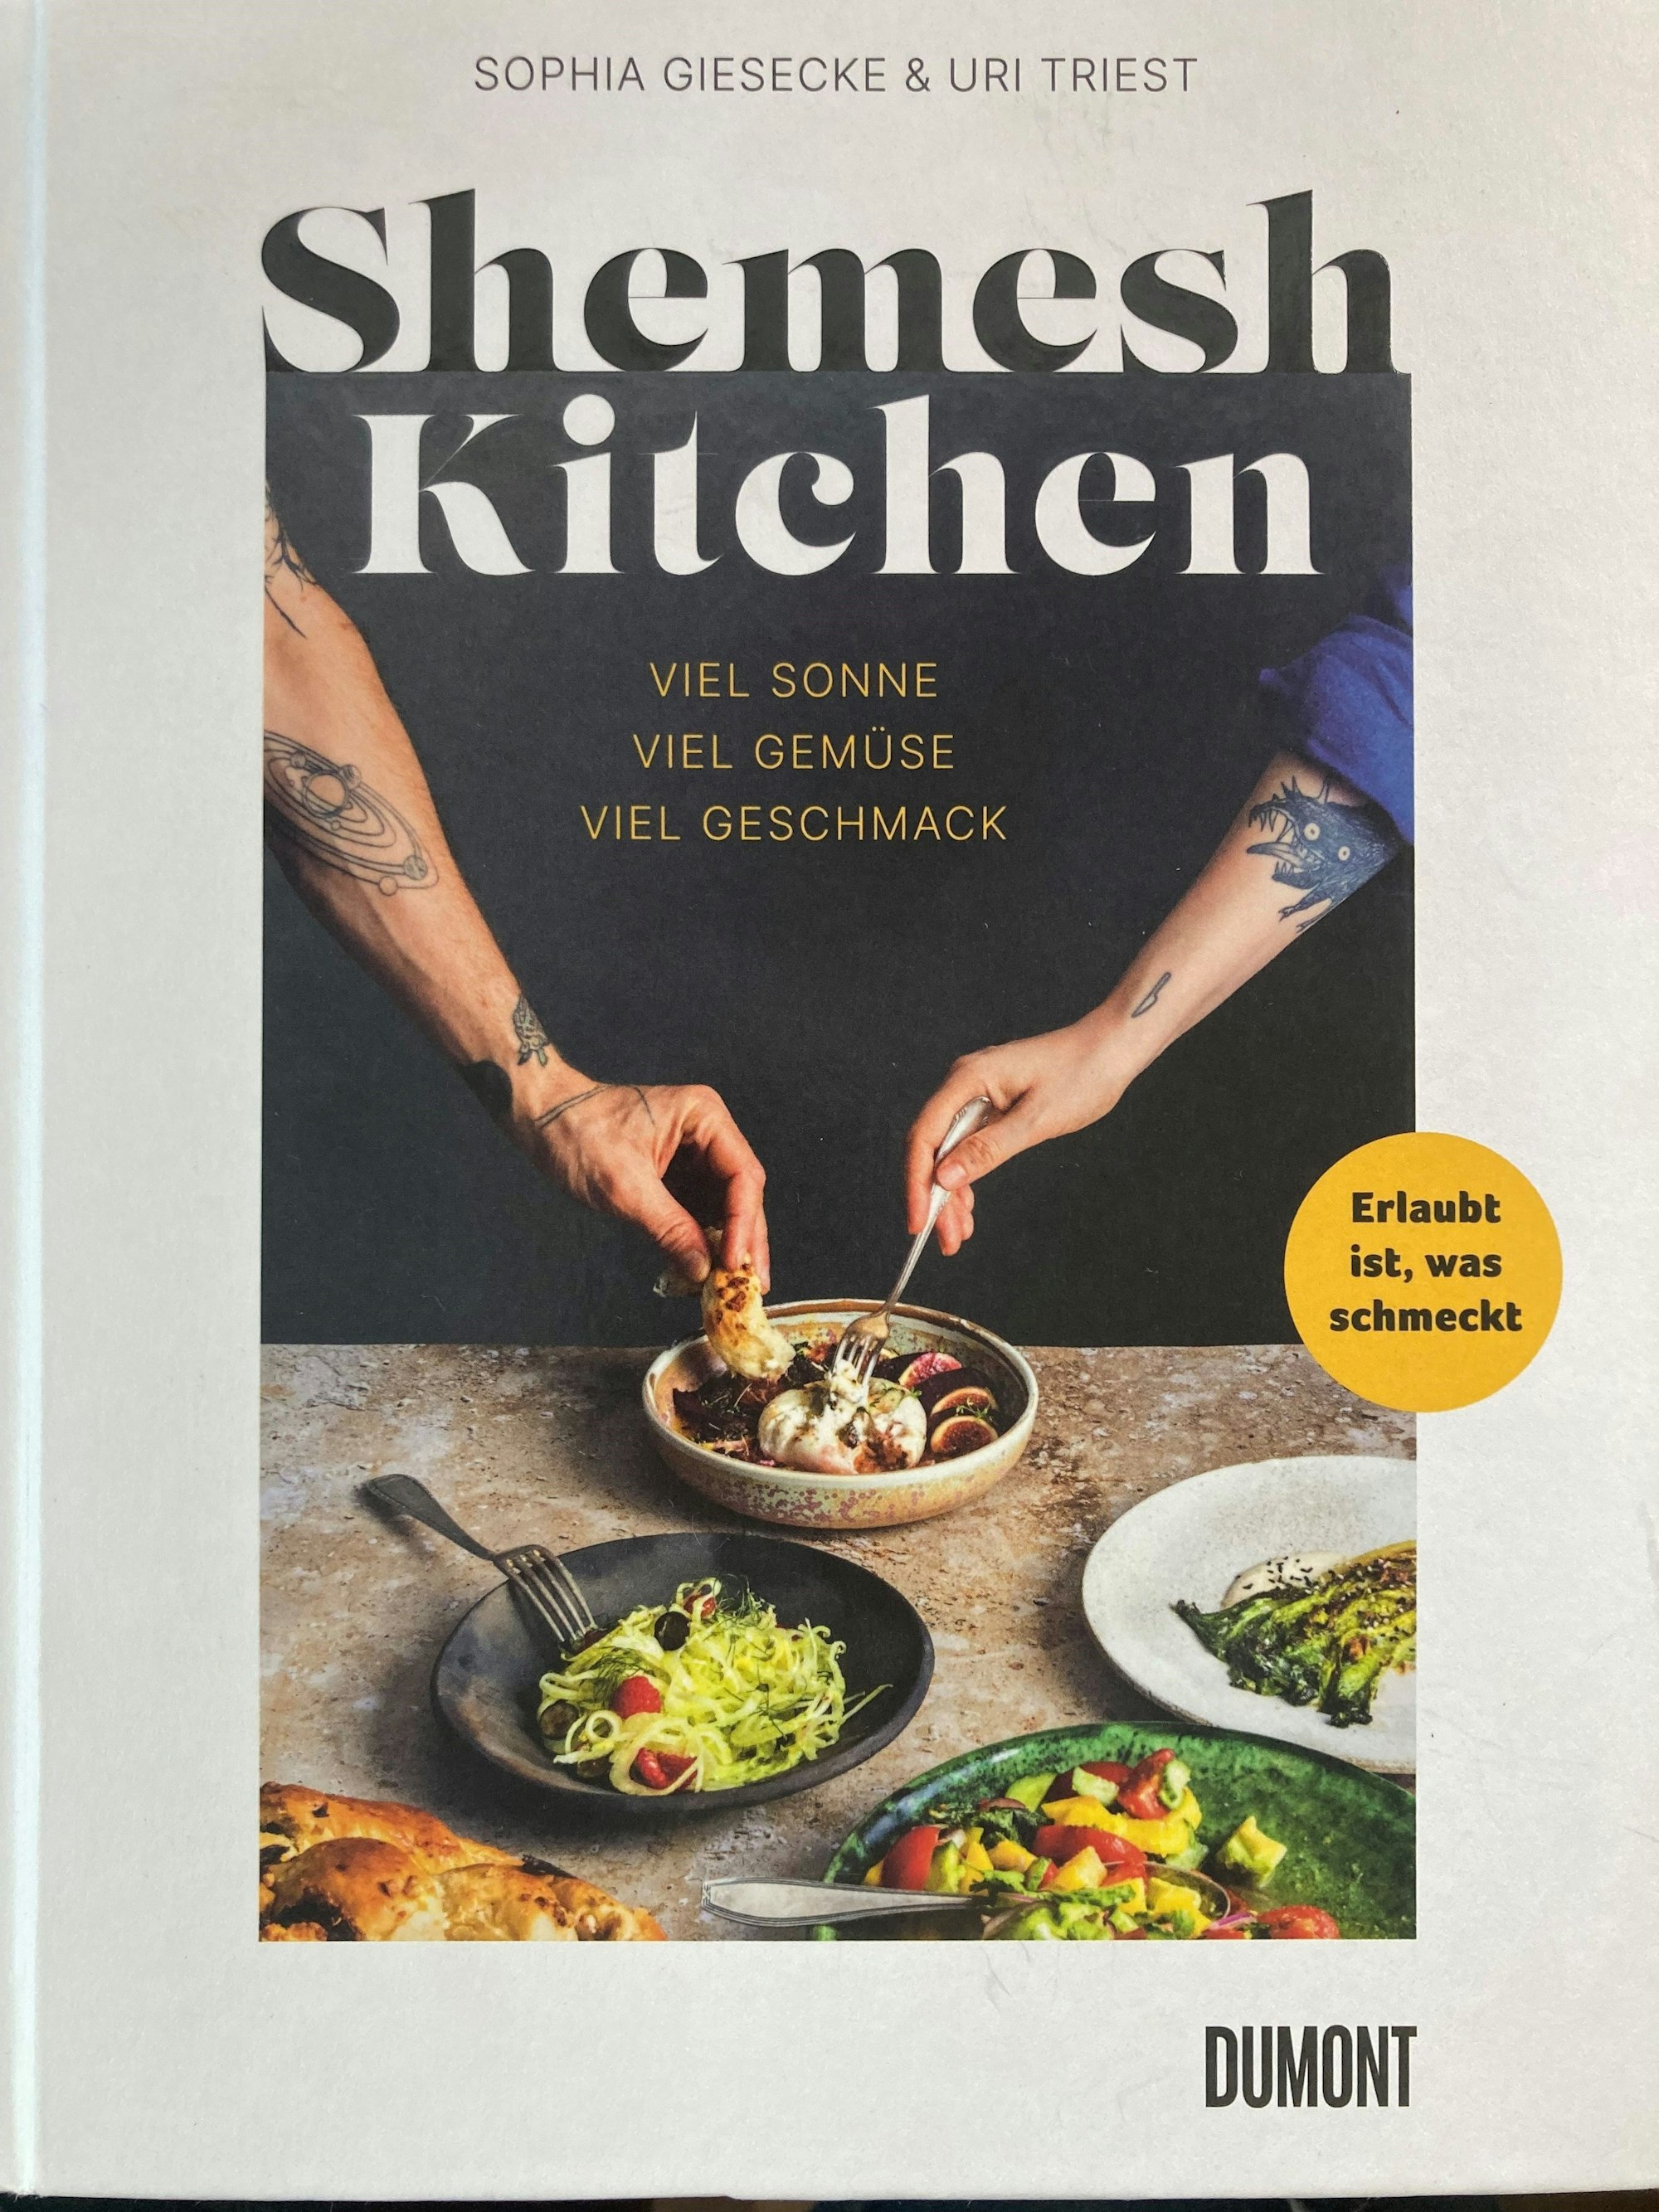 Neues Kochbuch Shemesh Kitchen, Dumontverlag, Sophia Giesecke & Uri Triest